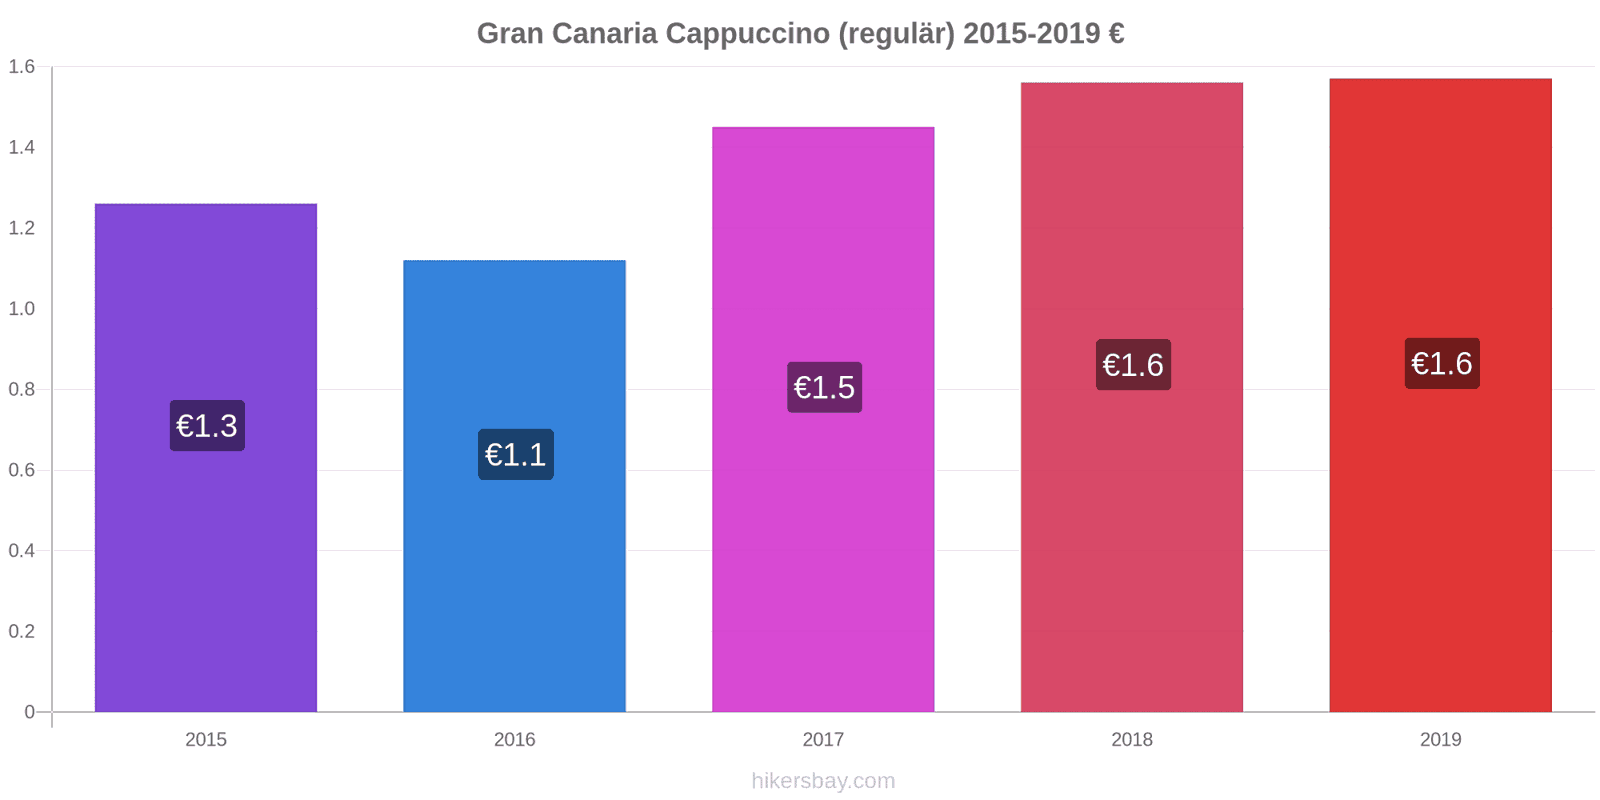 Gran Canaria Preisänderungen Cappuccino (regulär) hikersbay.com